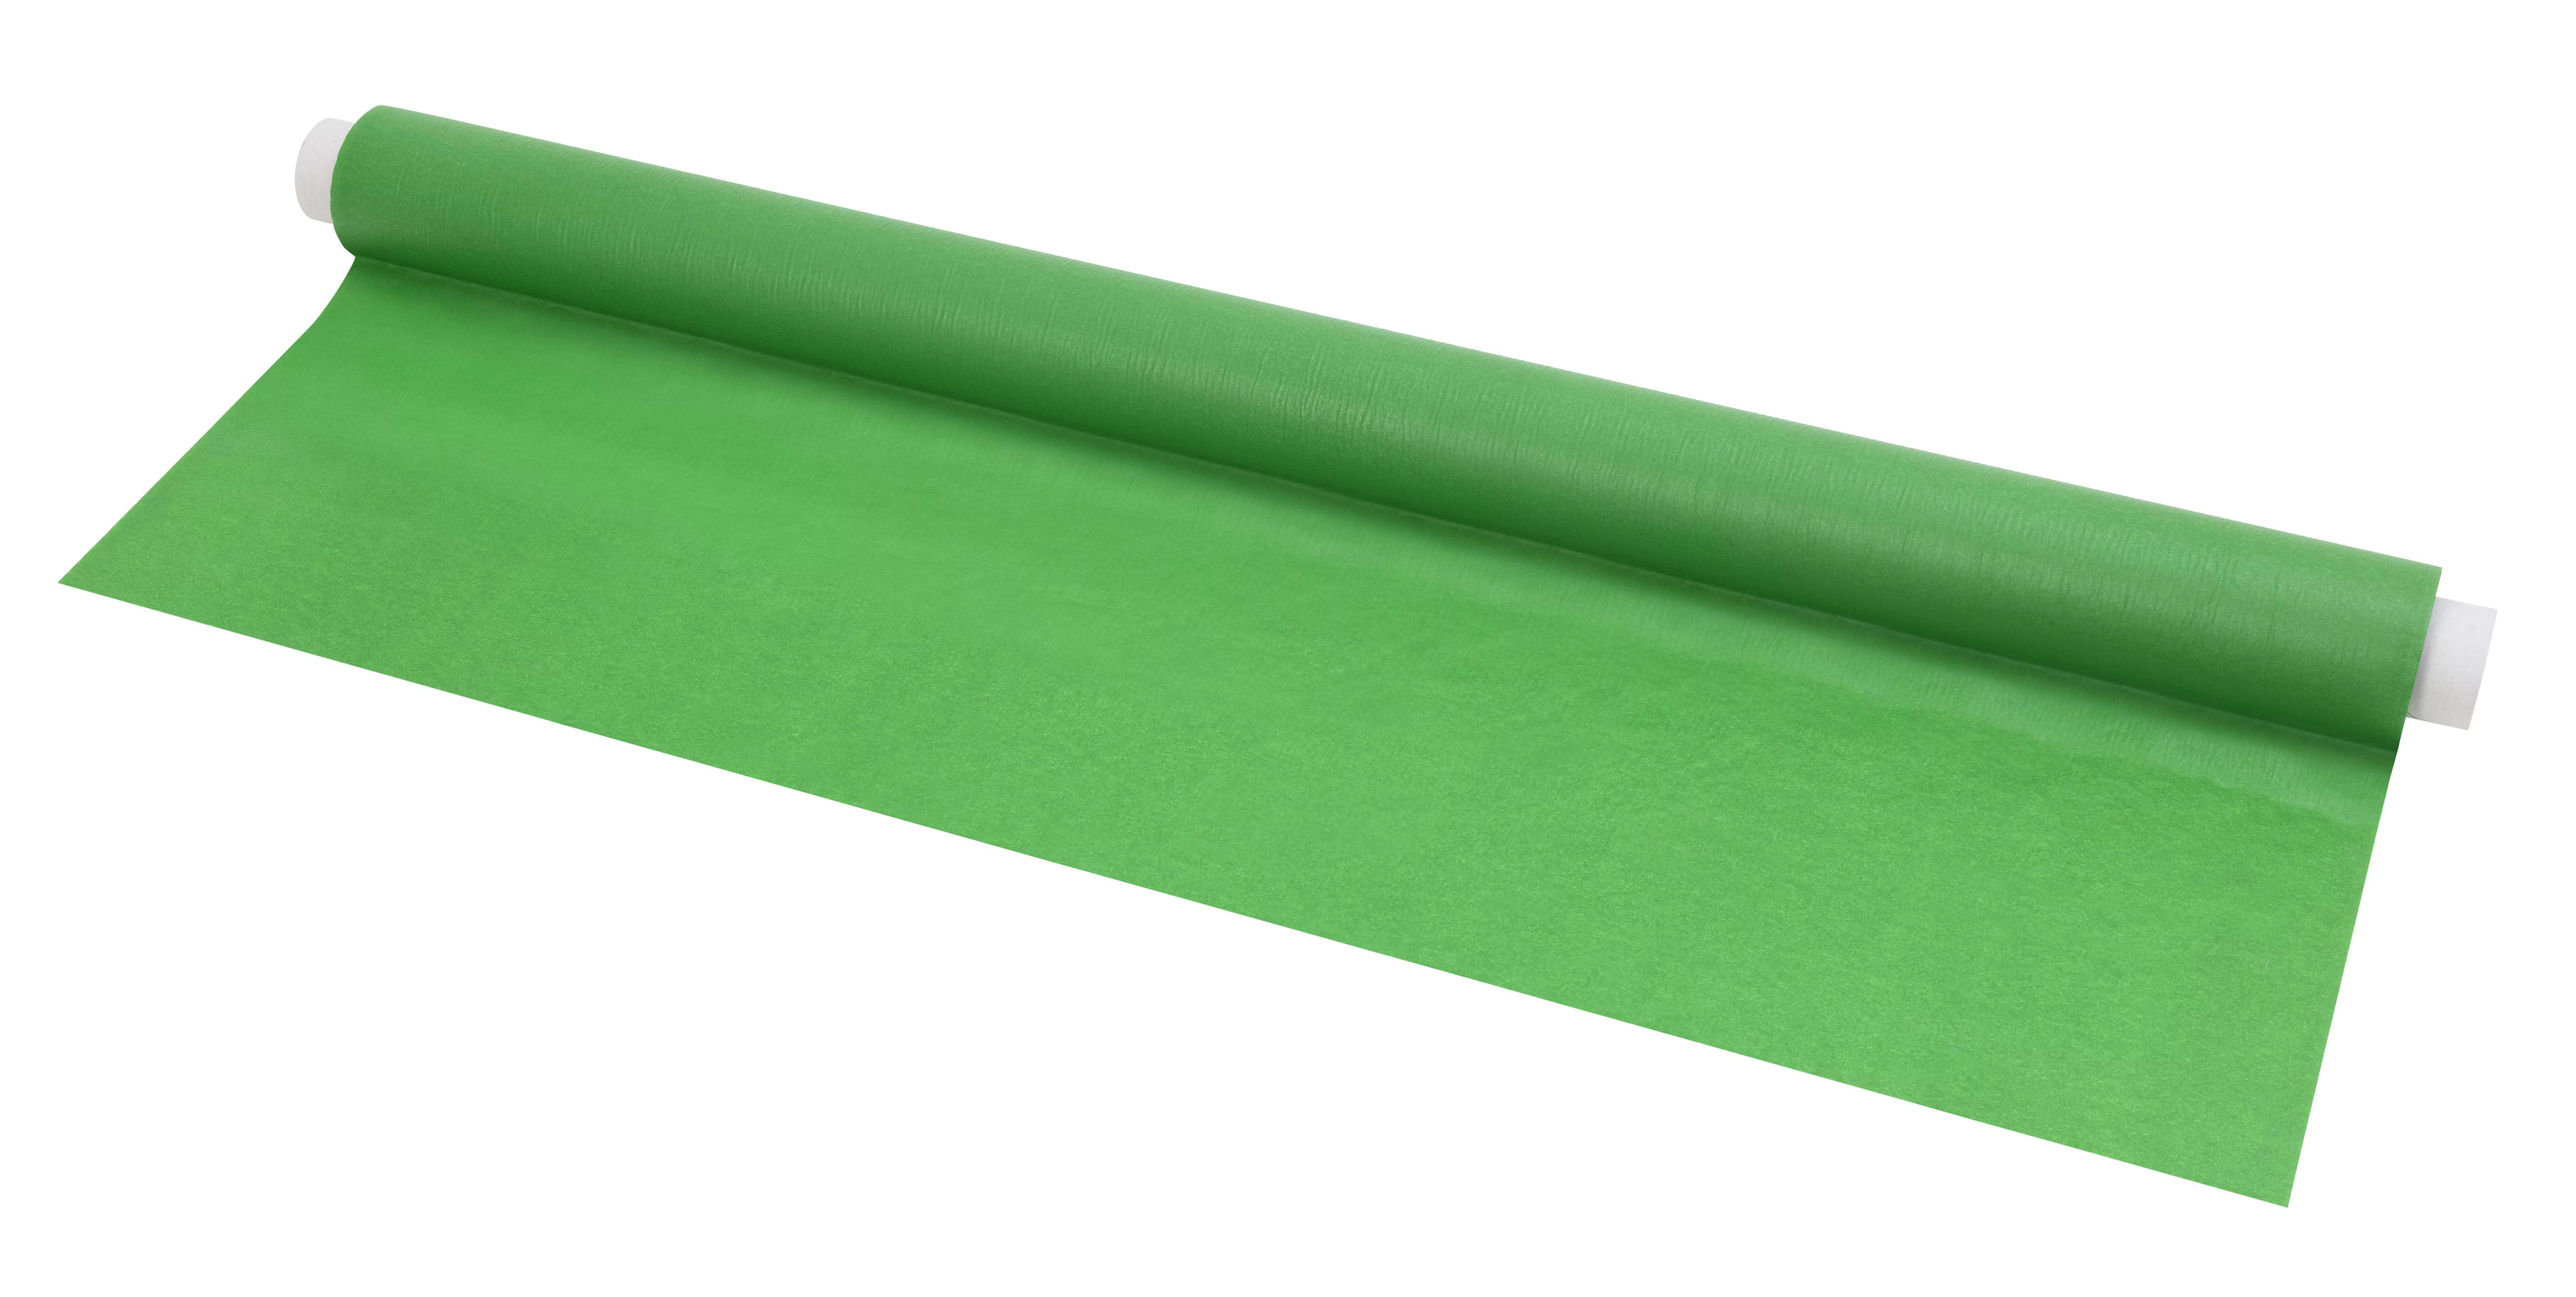 3M™ UV Resistant Green Masking Tape, 1550 mm x 55 m, Log Roll, 2 Roll/Case